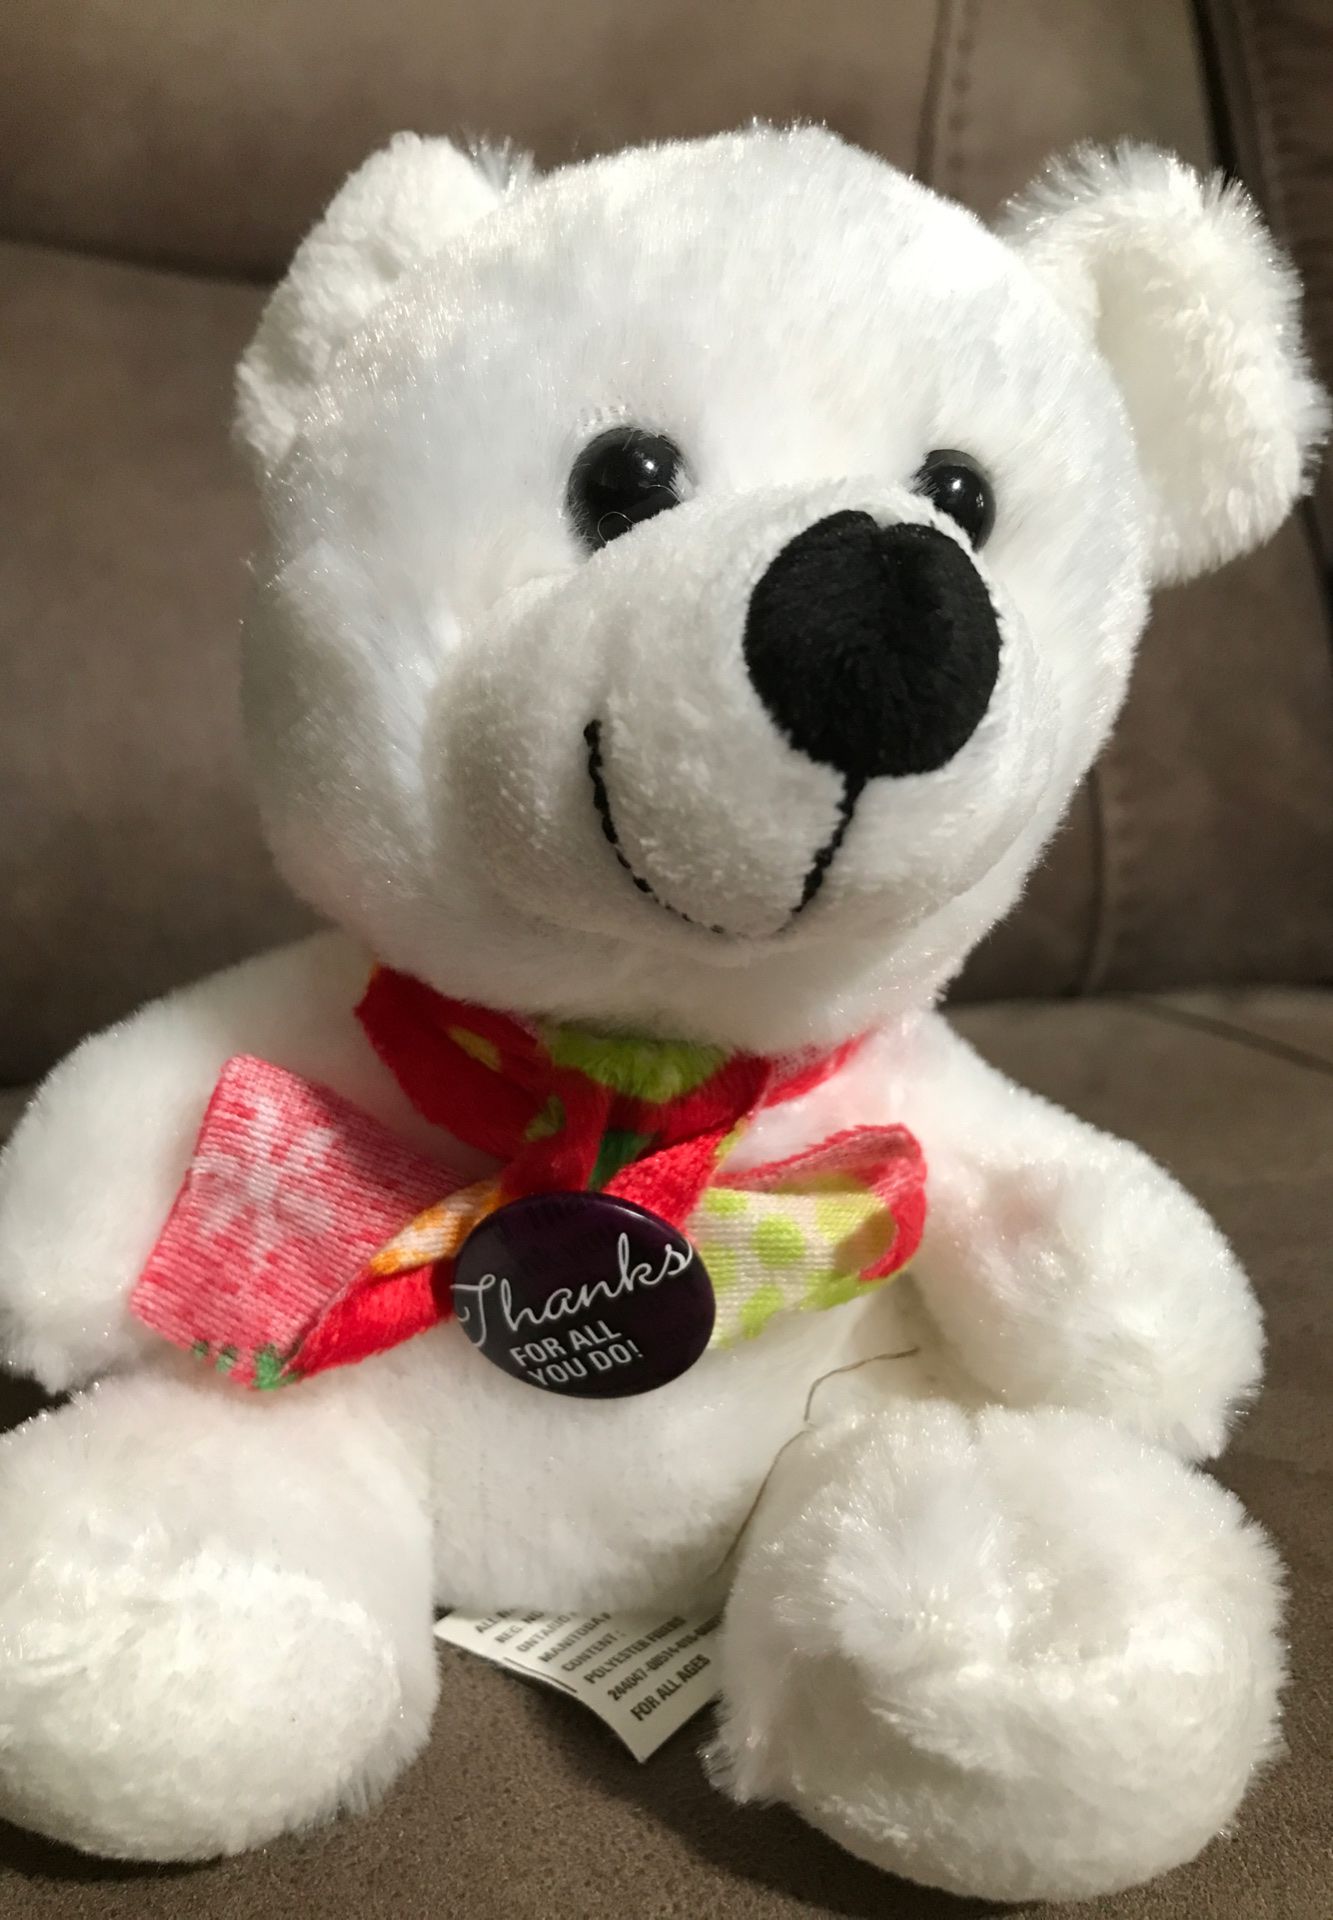 6” Xmas Bear stuffed animal $1